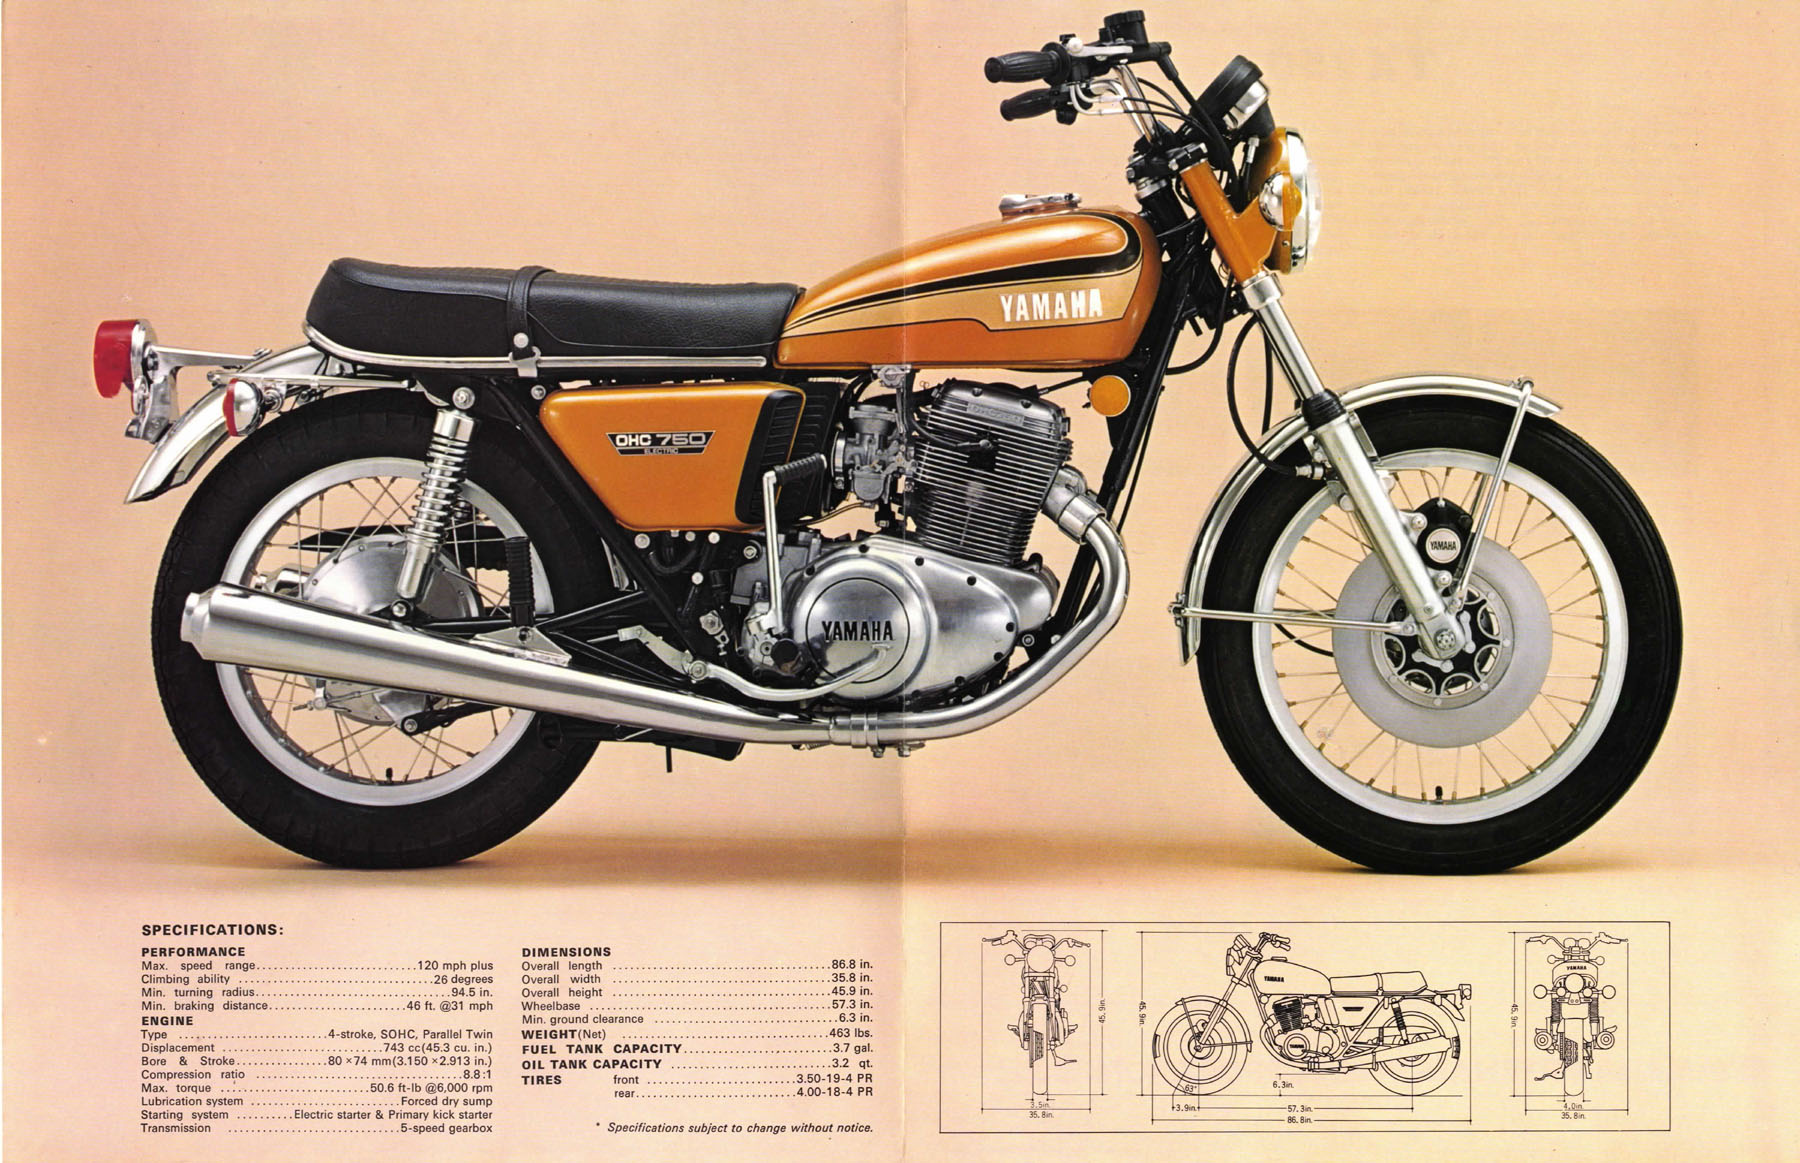 743cc 1972 Yamaha TX 750cc Japan Touring Bike Motorcycle Photo Spec Info Card 